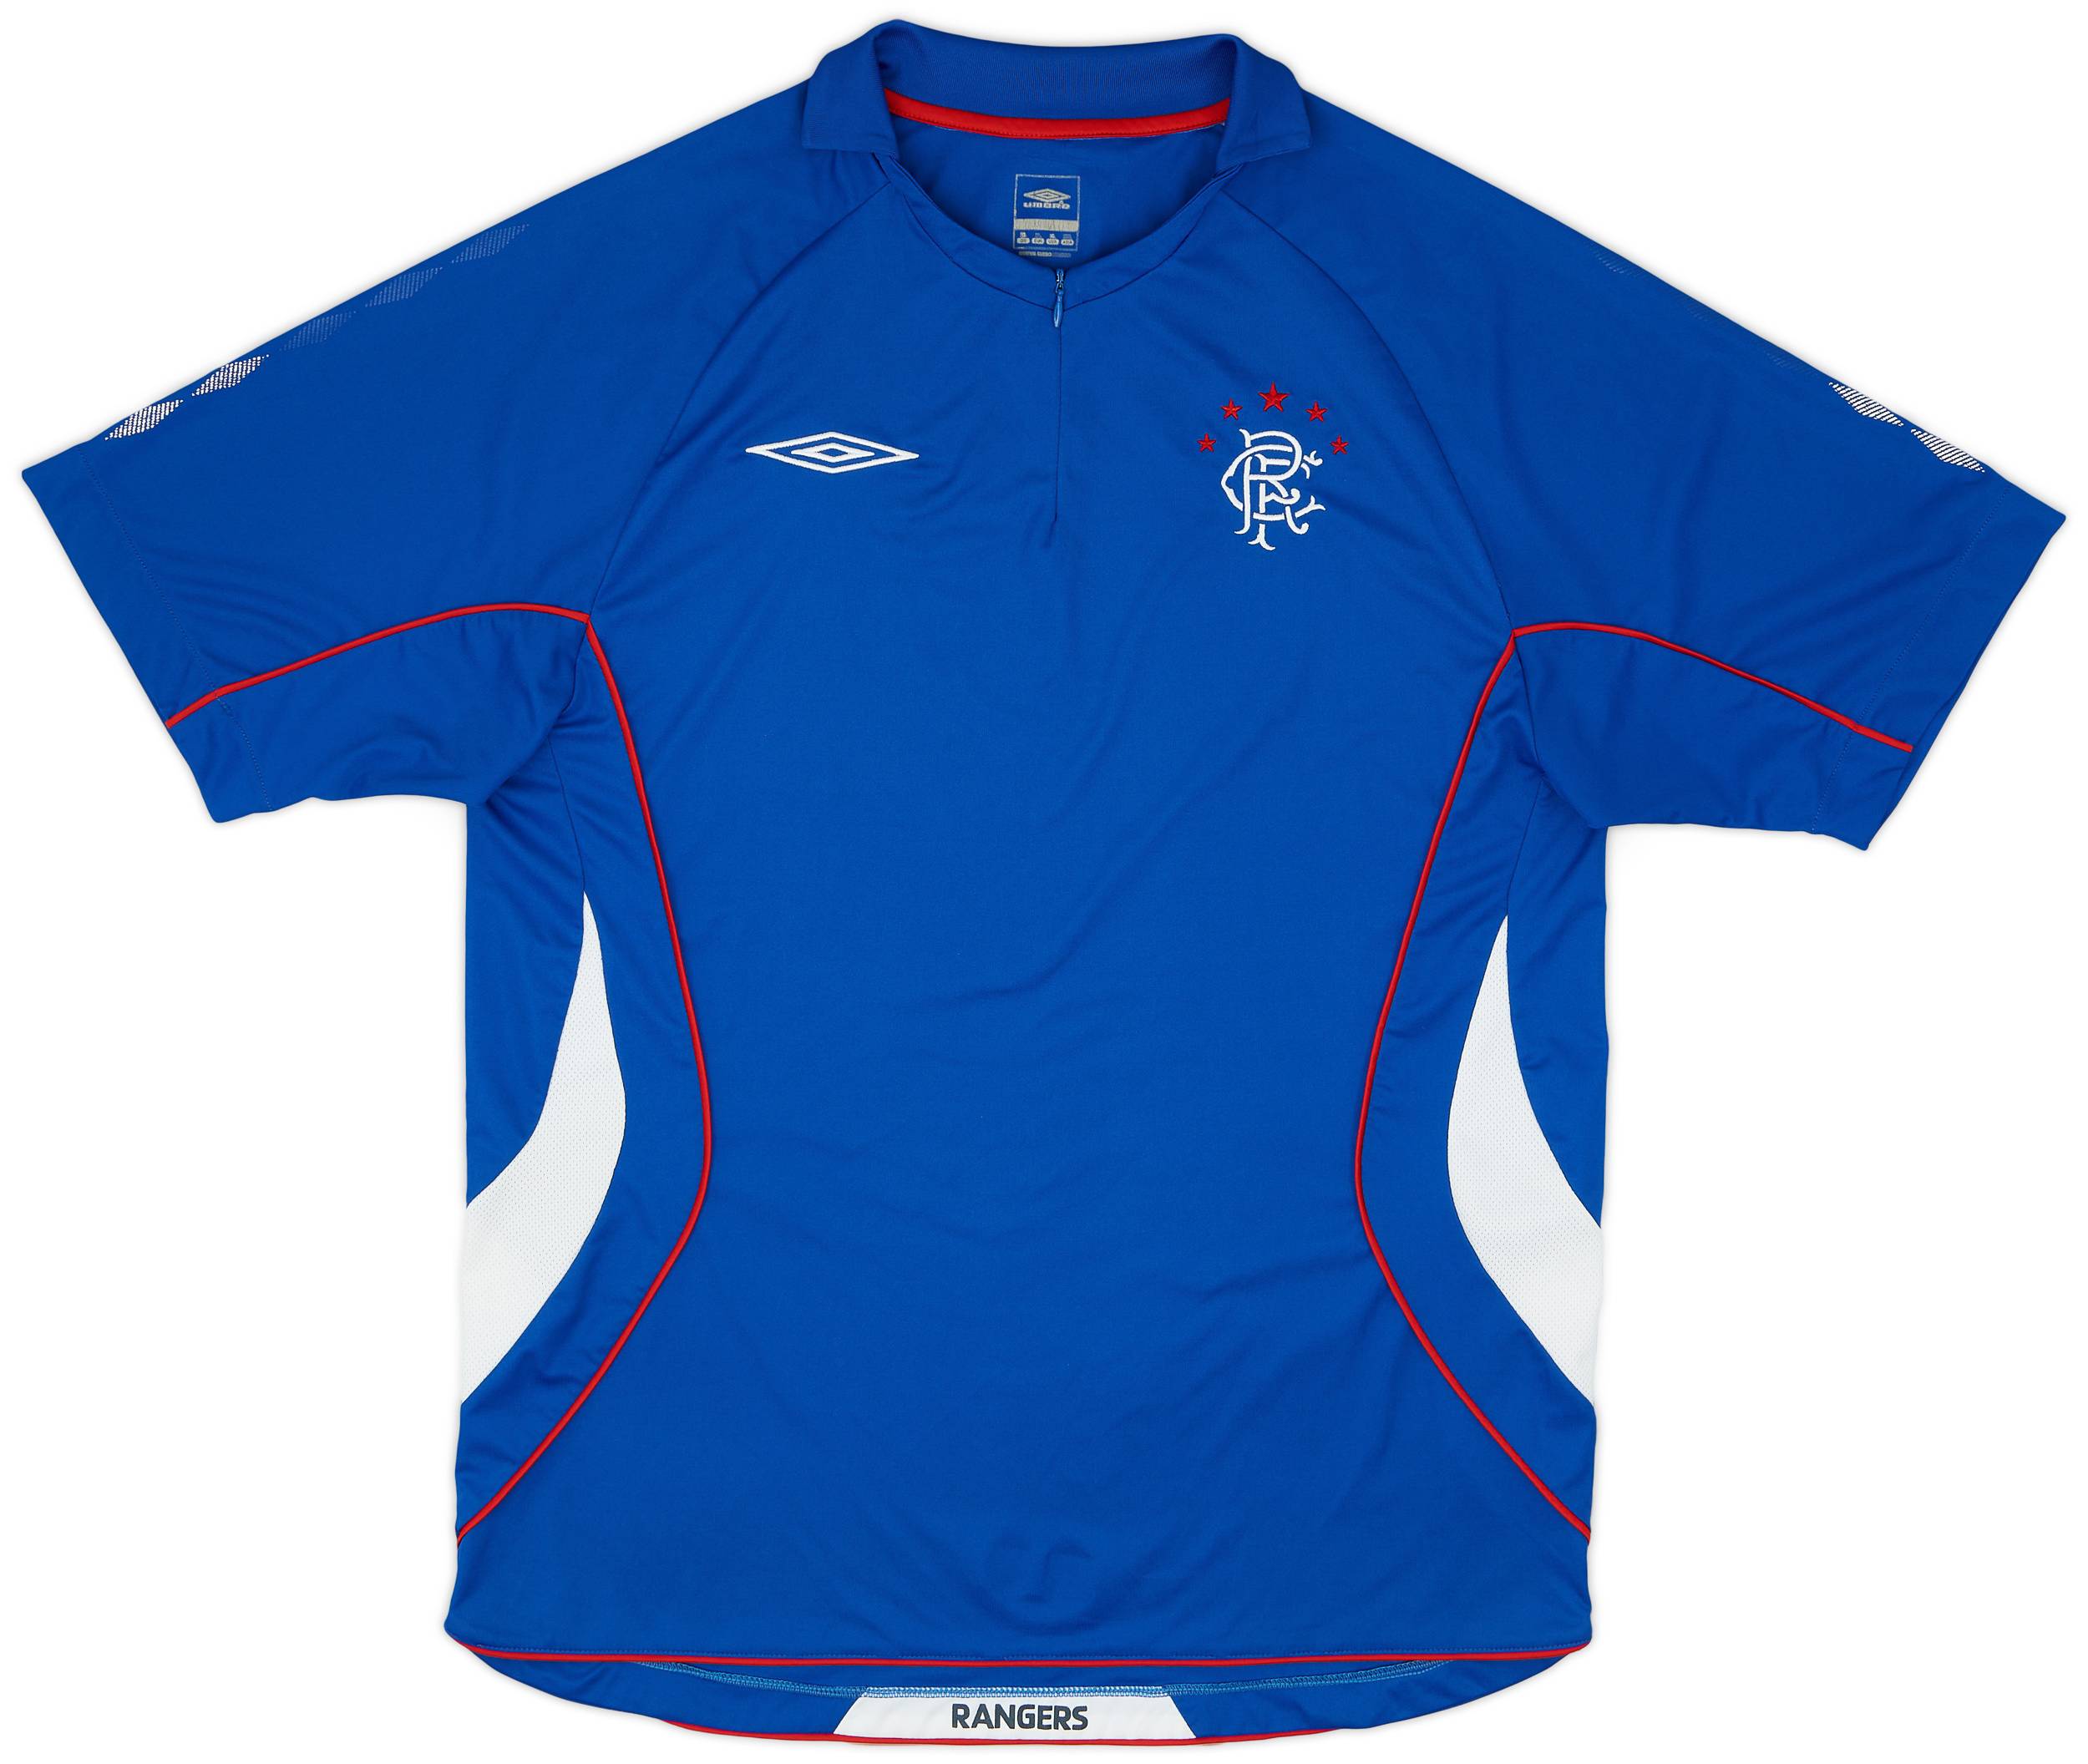 2006-07 Rangers Umbro 1/4 Zip Training Shirt - 9/10 - (XL)